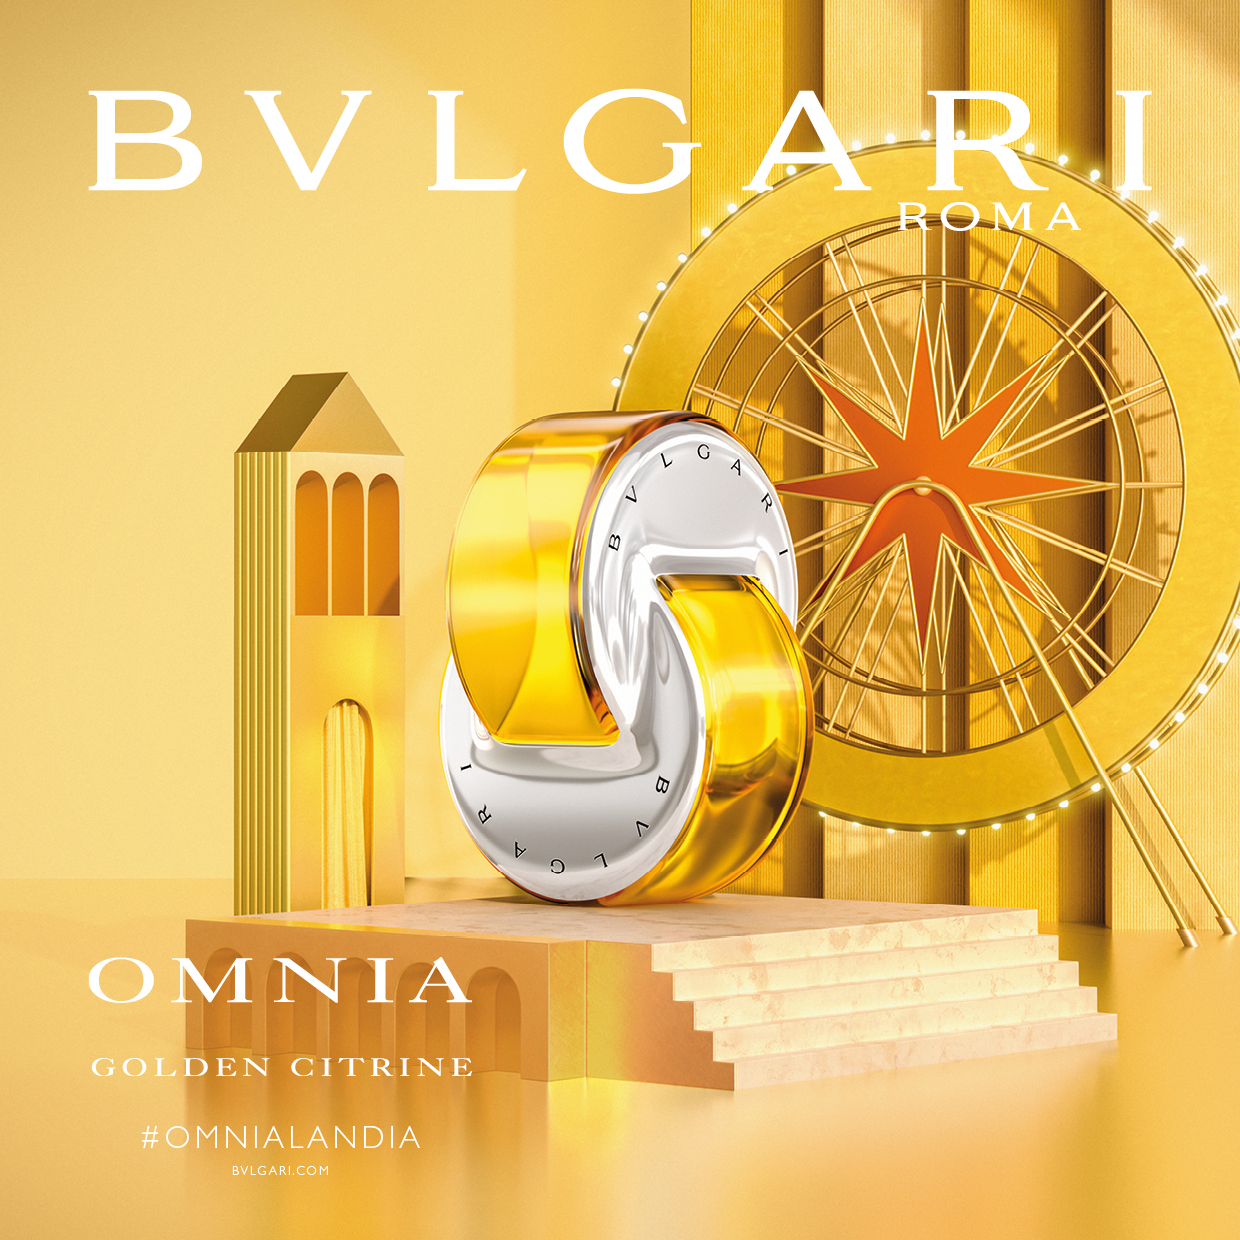 Bvlgari - Omnia Golden Citrine